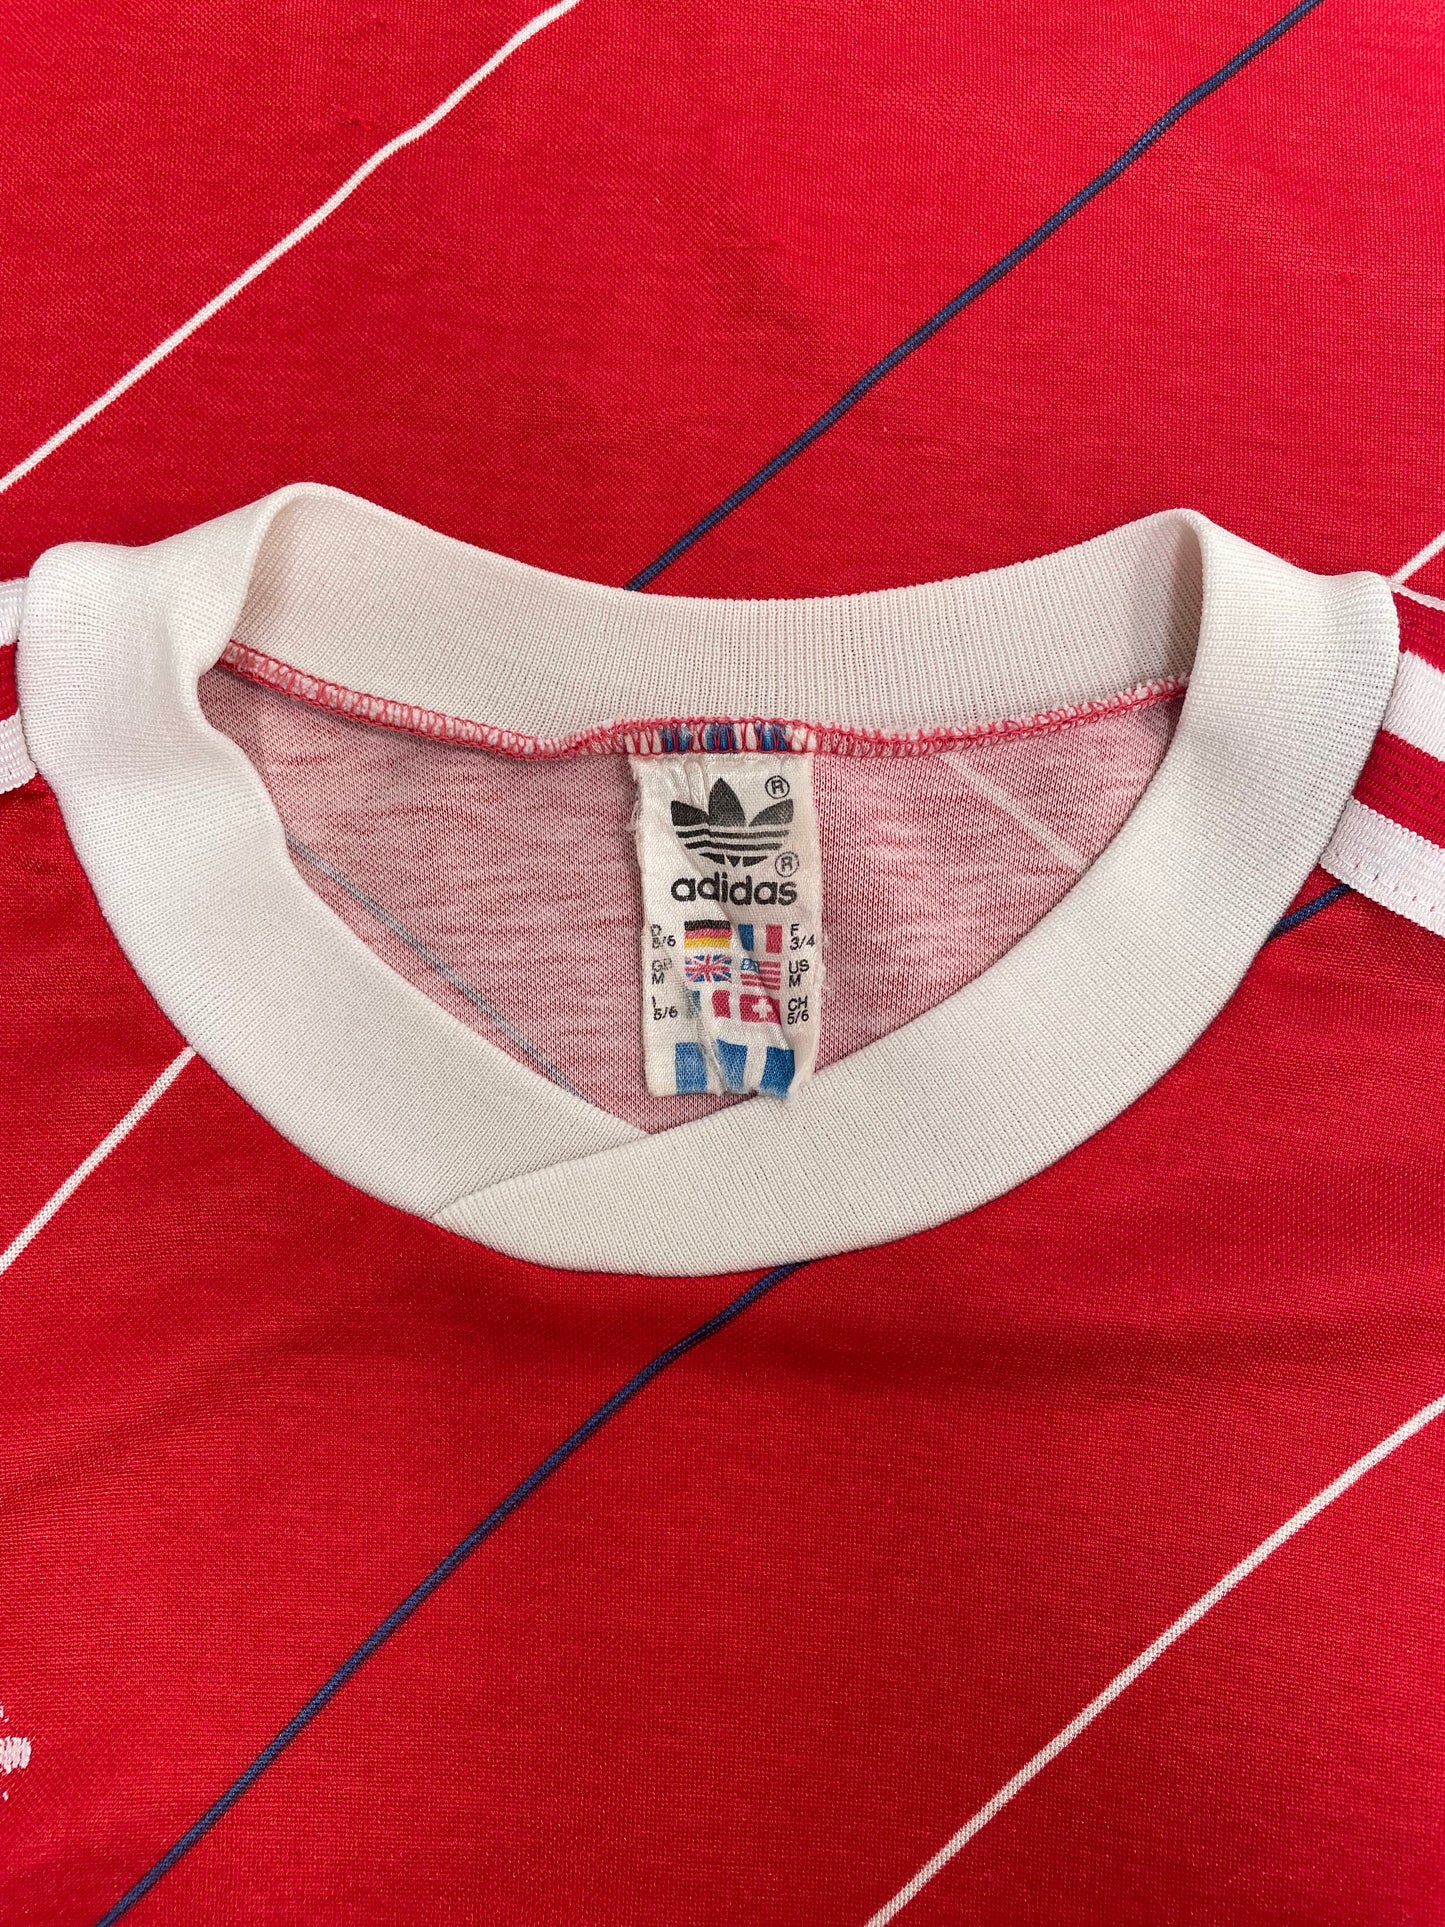 Adidas Bayern Munchen Jersey 1985-1986